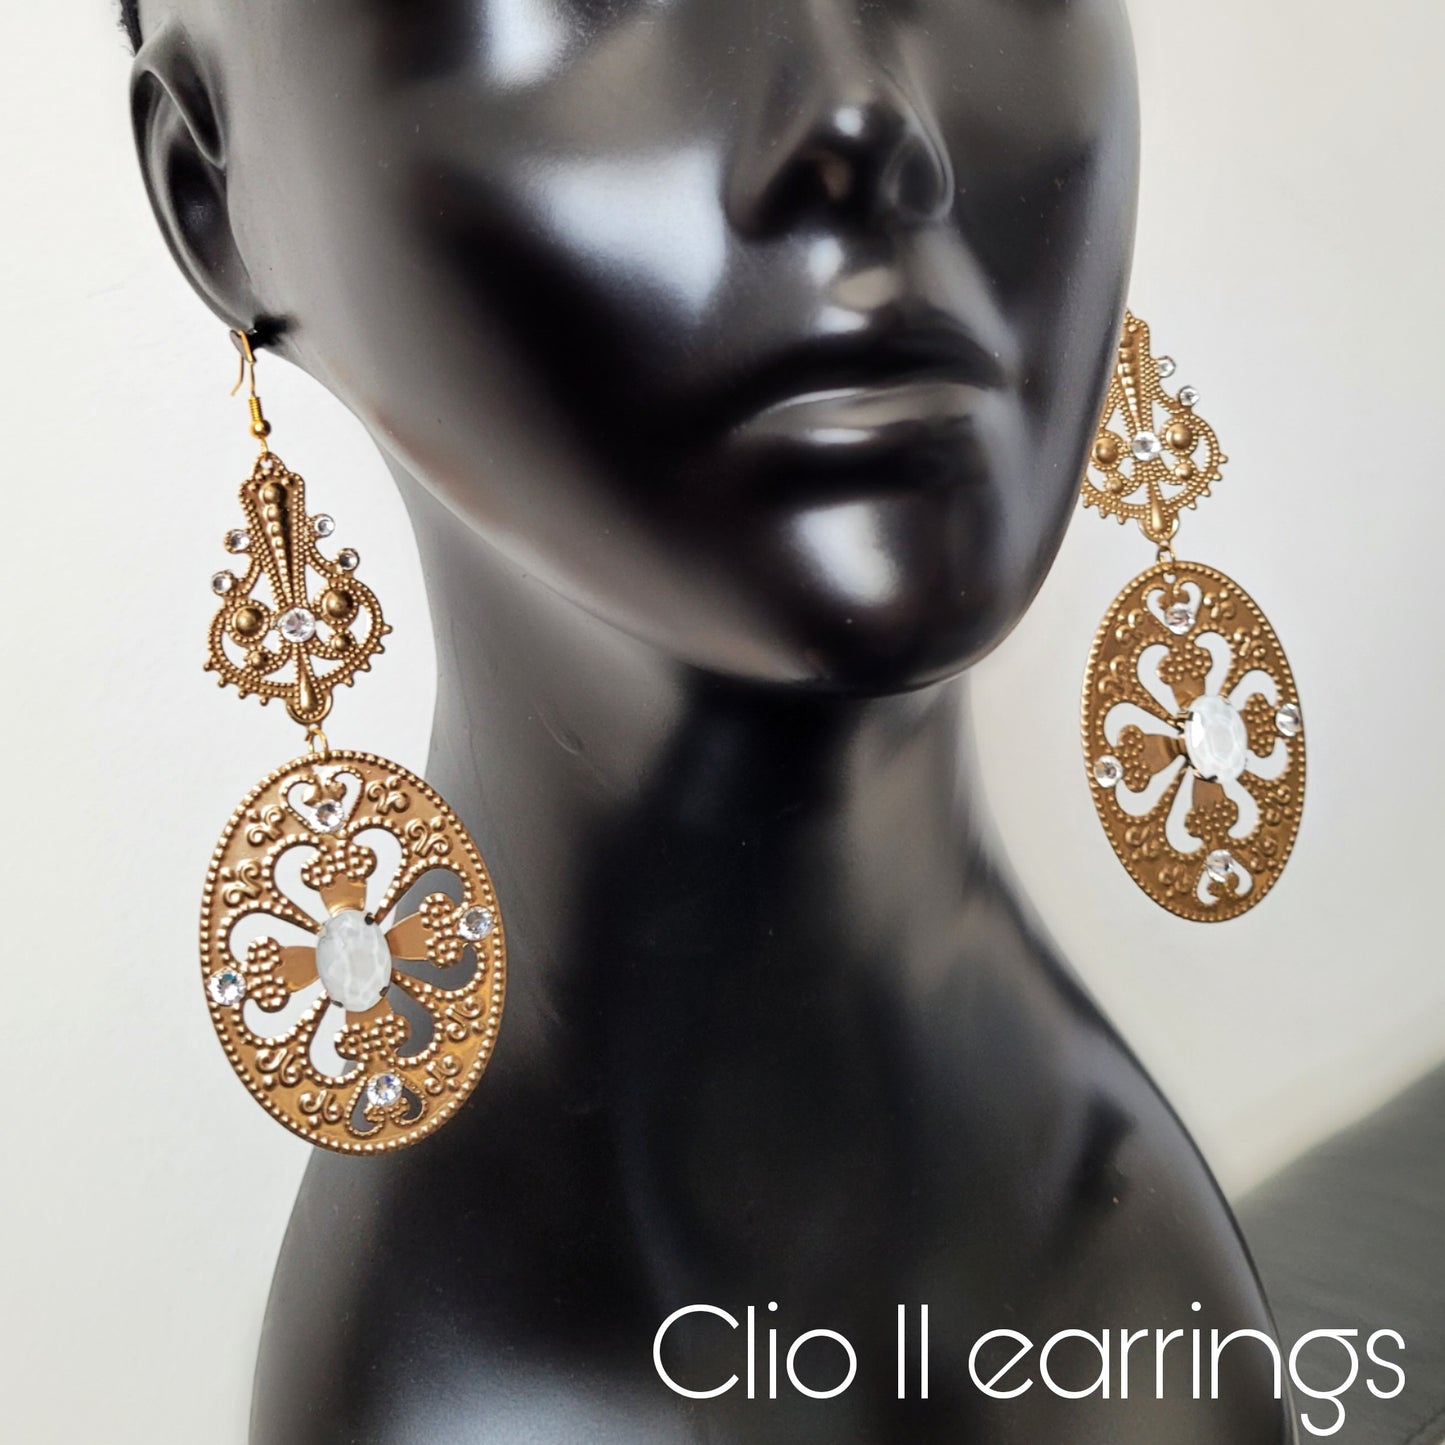 Deusa ex Machina collection: The Clio earrings